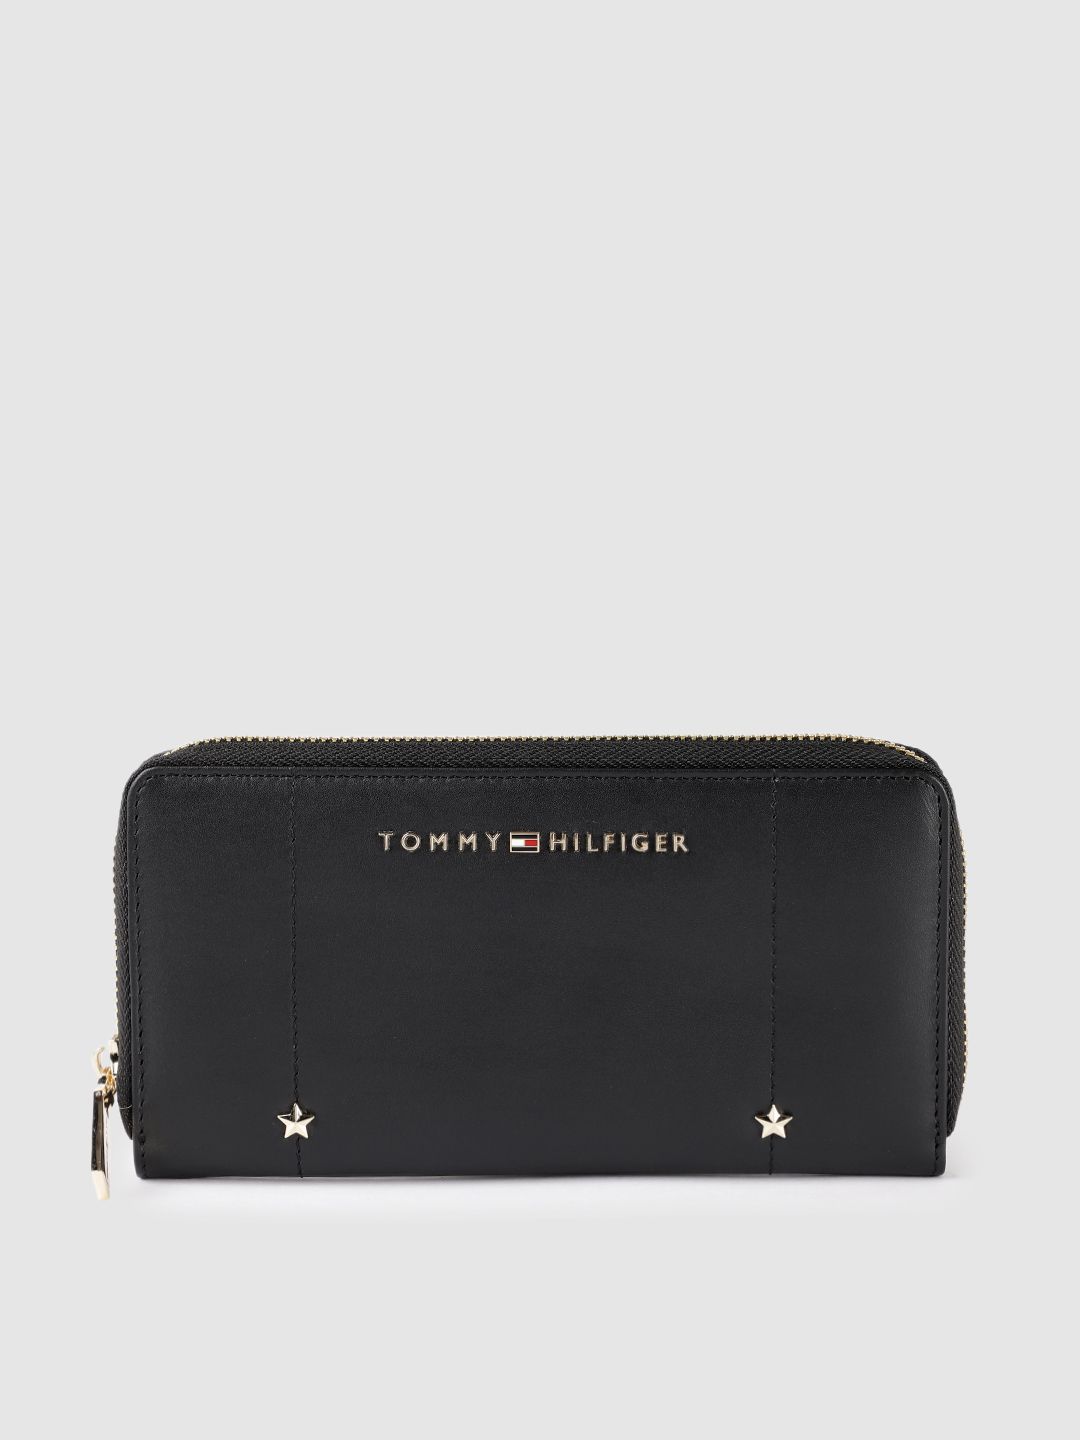 Tommy Hilfiger Women Black Leather Zip Around Wallet Price in India